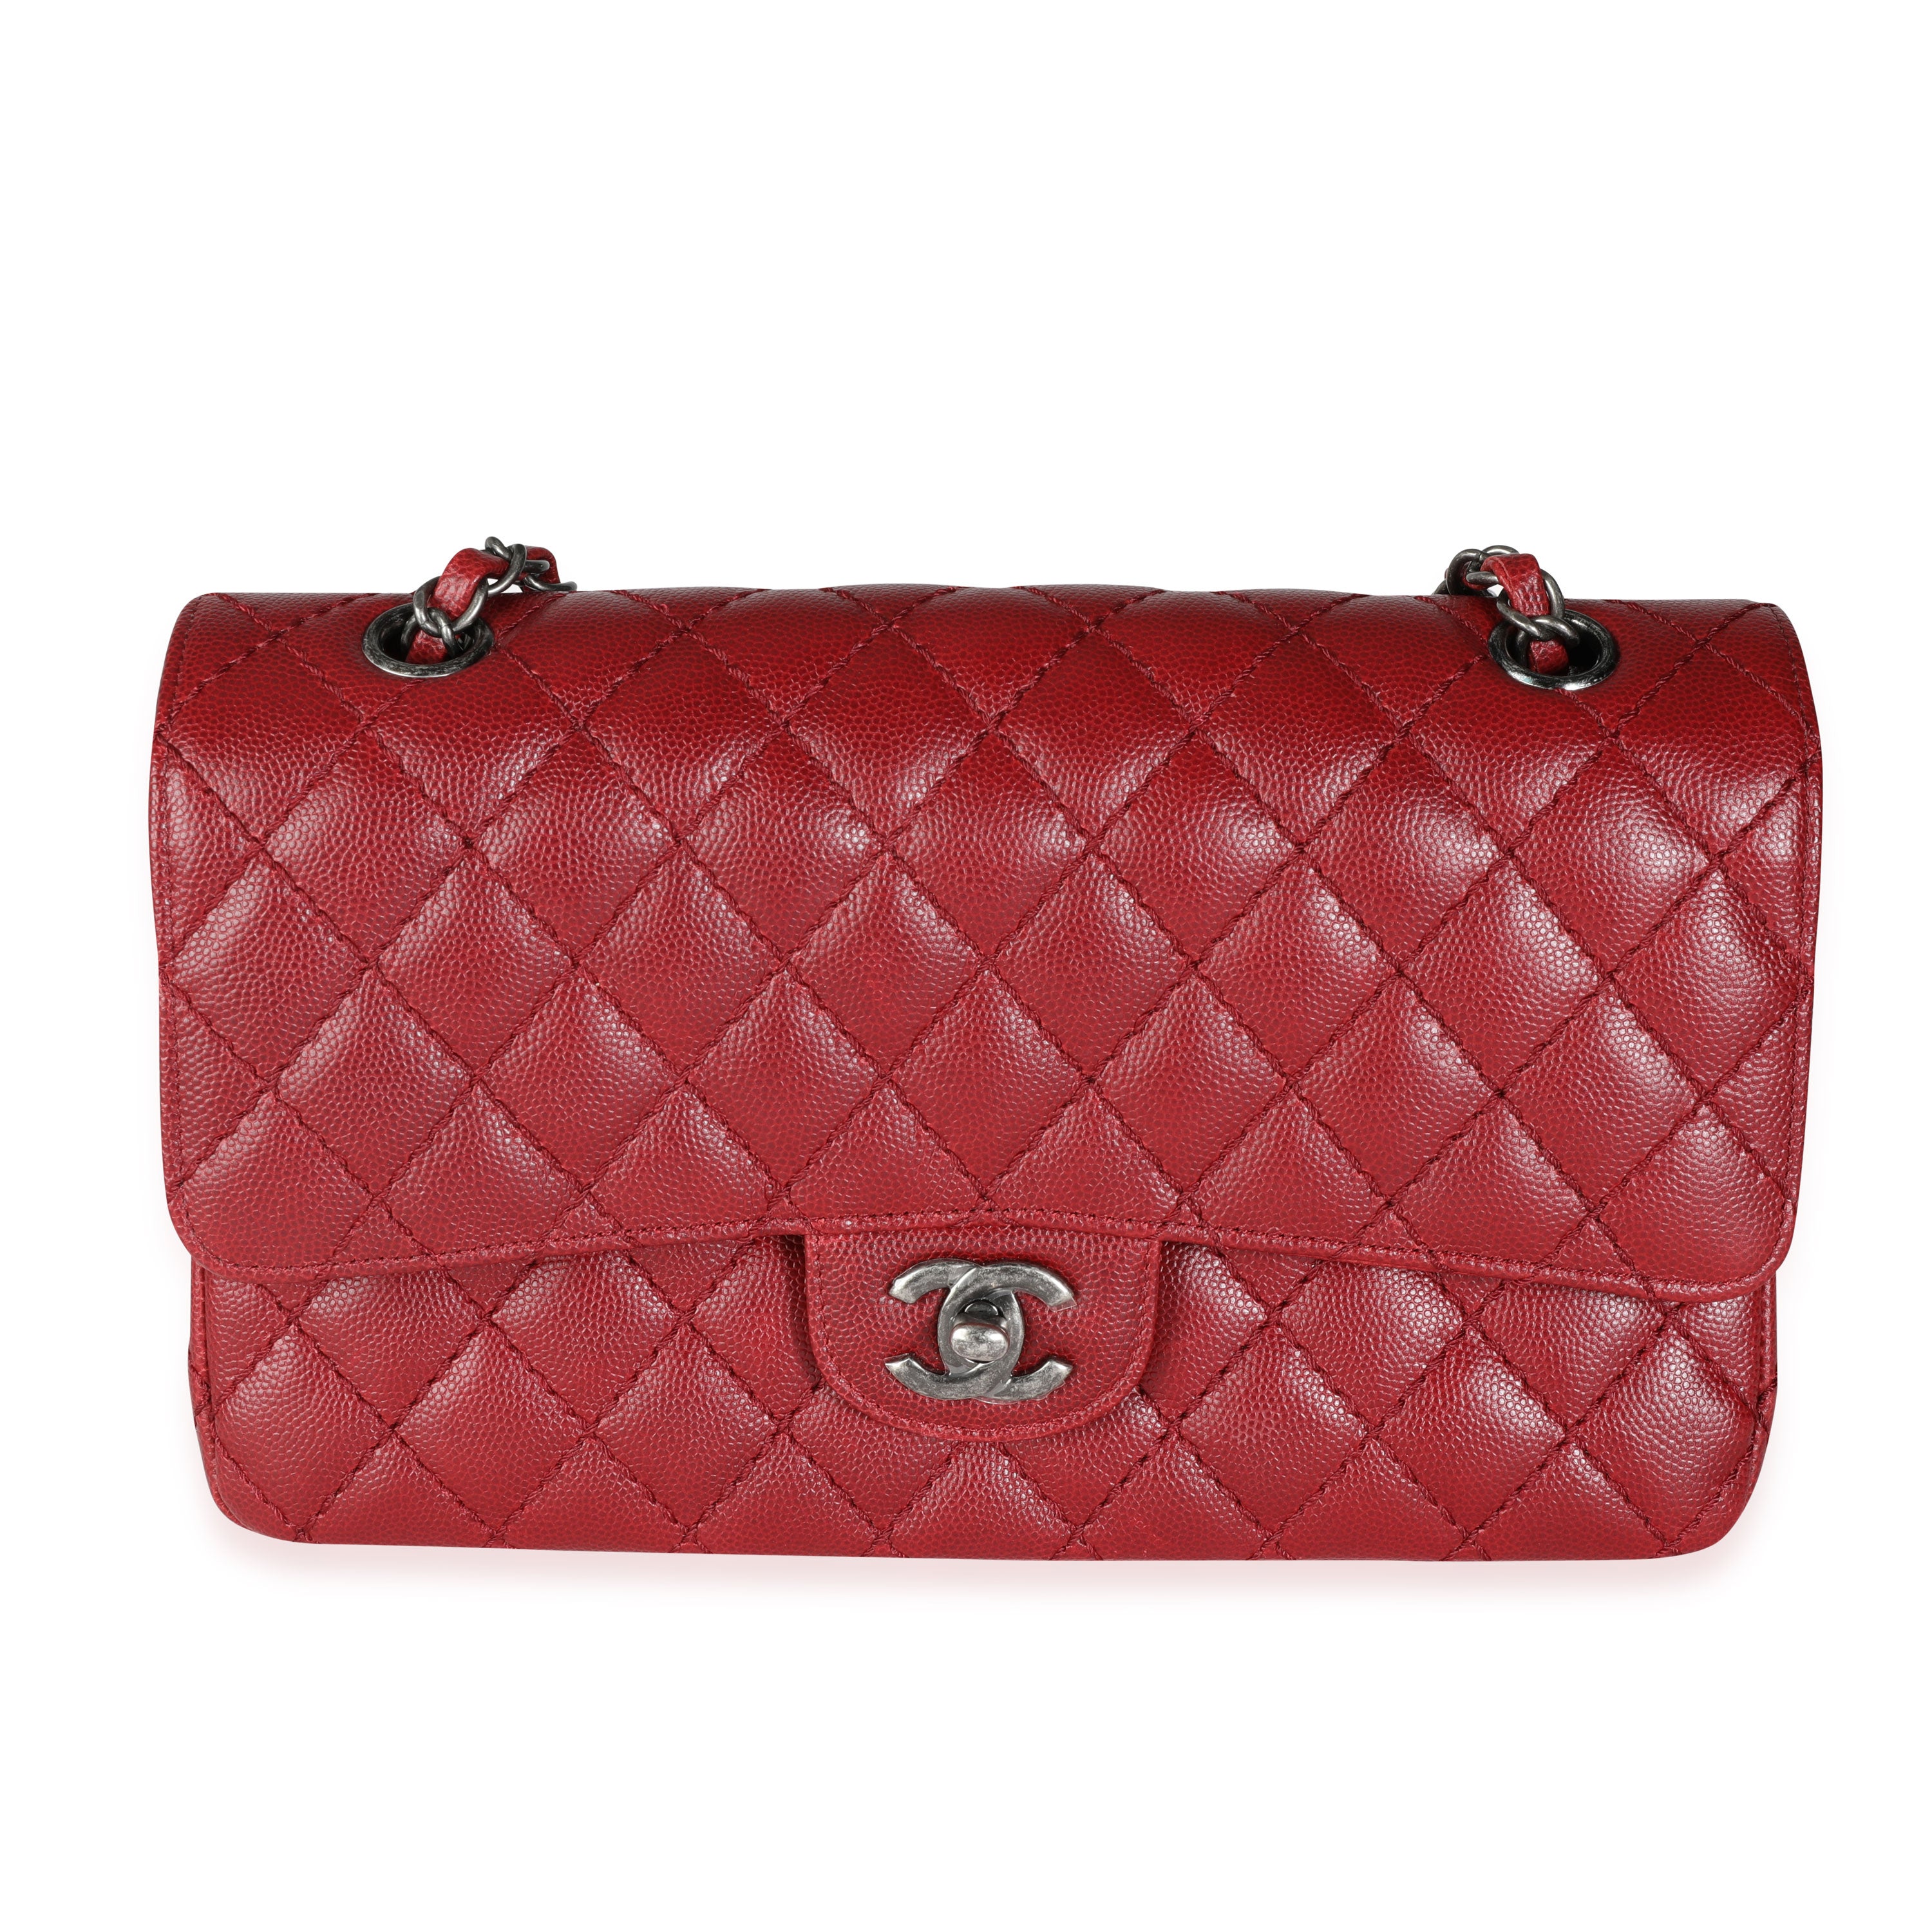 Chanel Classic Plum Red Bag  Nice Bag